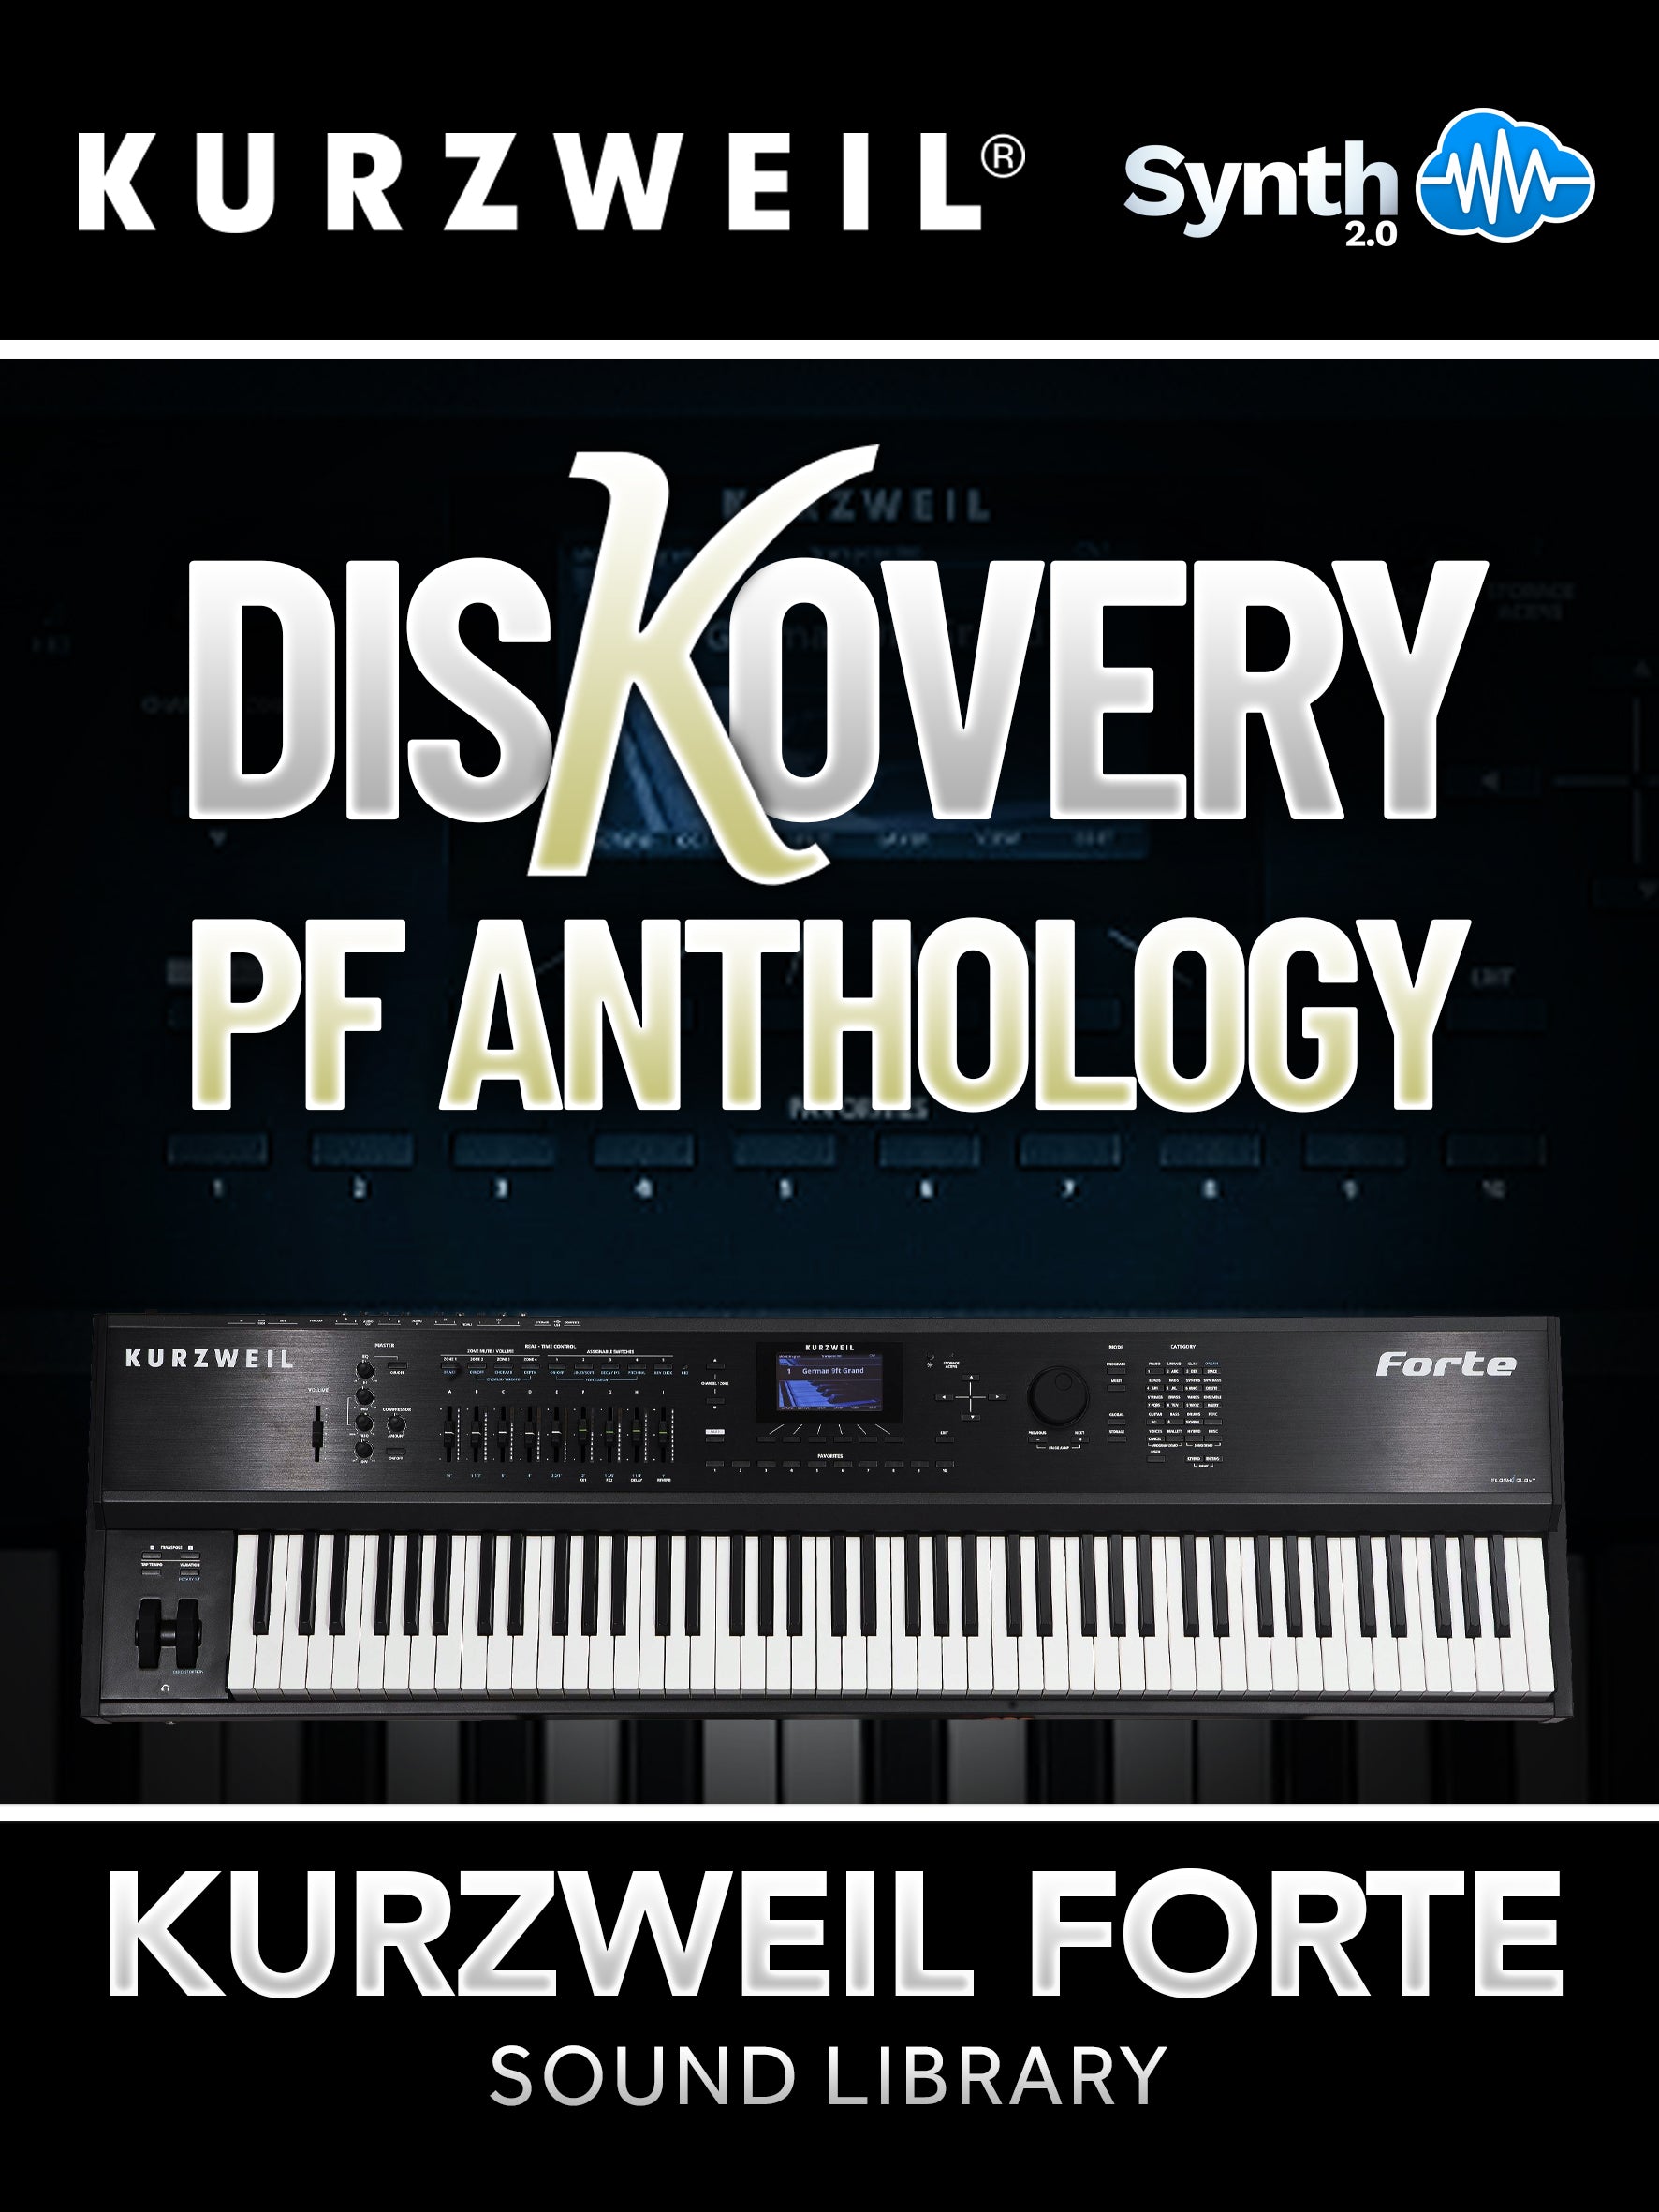 SSX128 - DisKovery PF Anthology - Kurzweil Forte-7 ( over 74 presets )